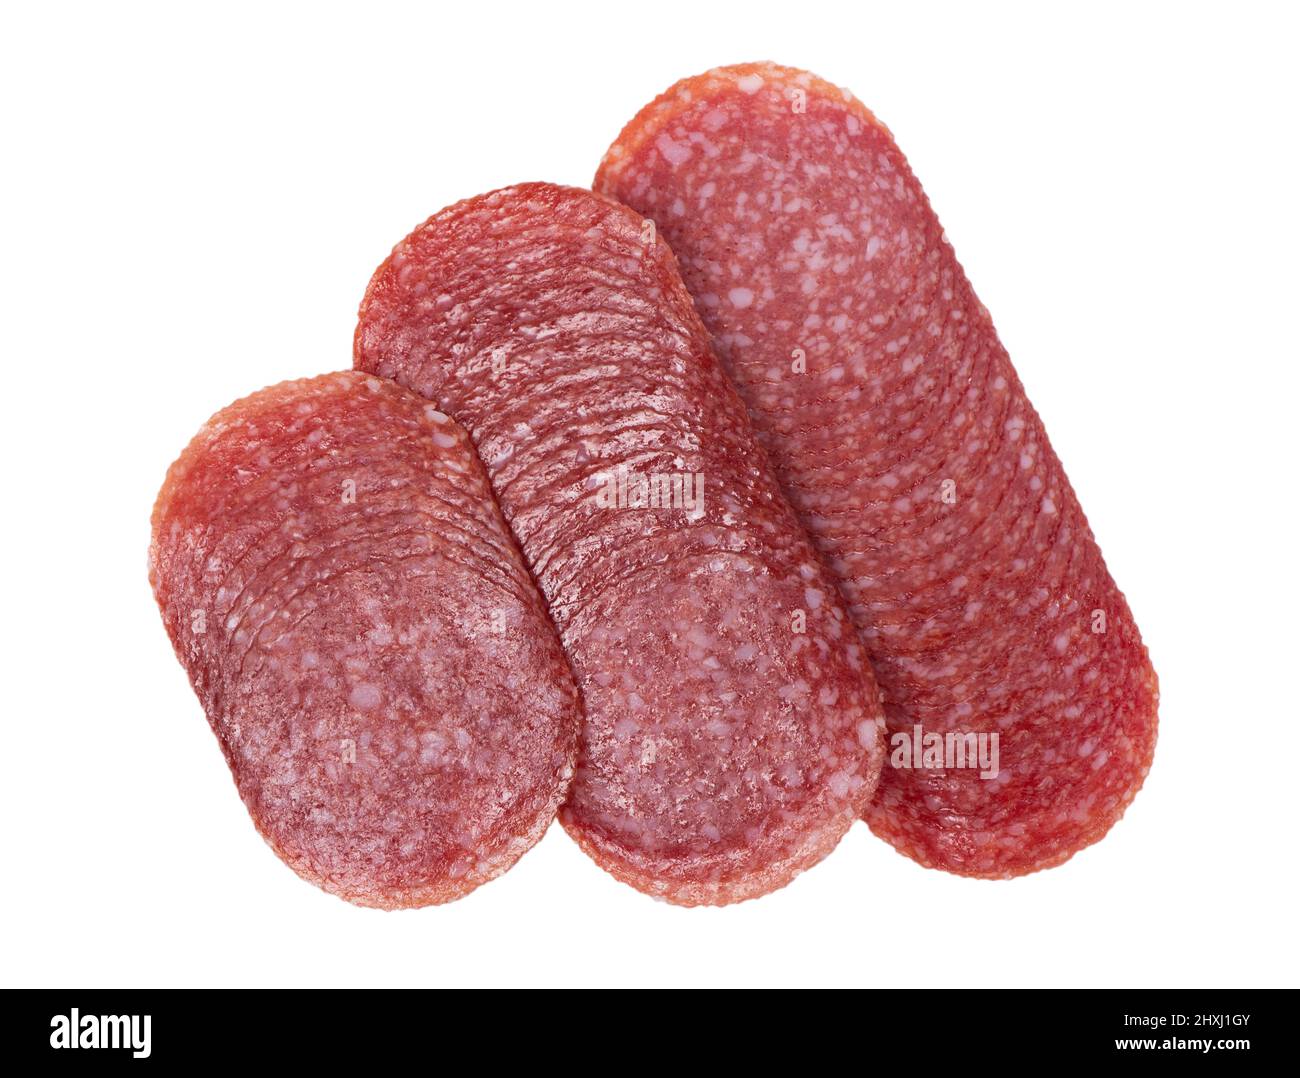 Sliced smoked salami sausage isolated on white background Stock Photo